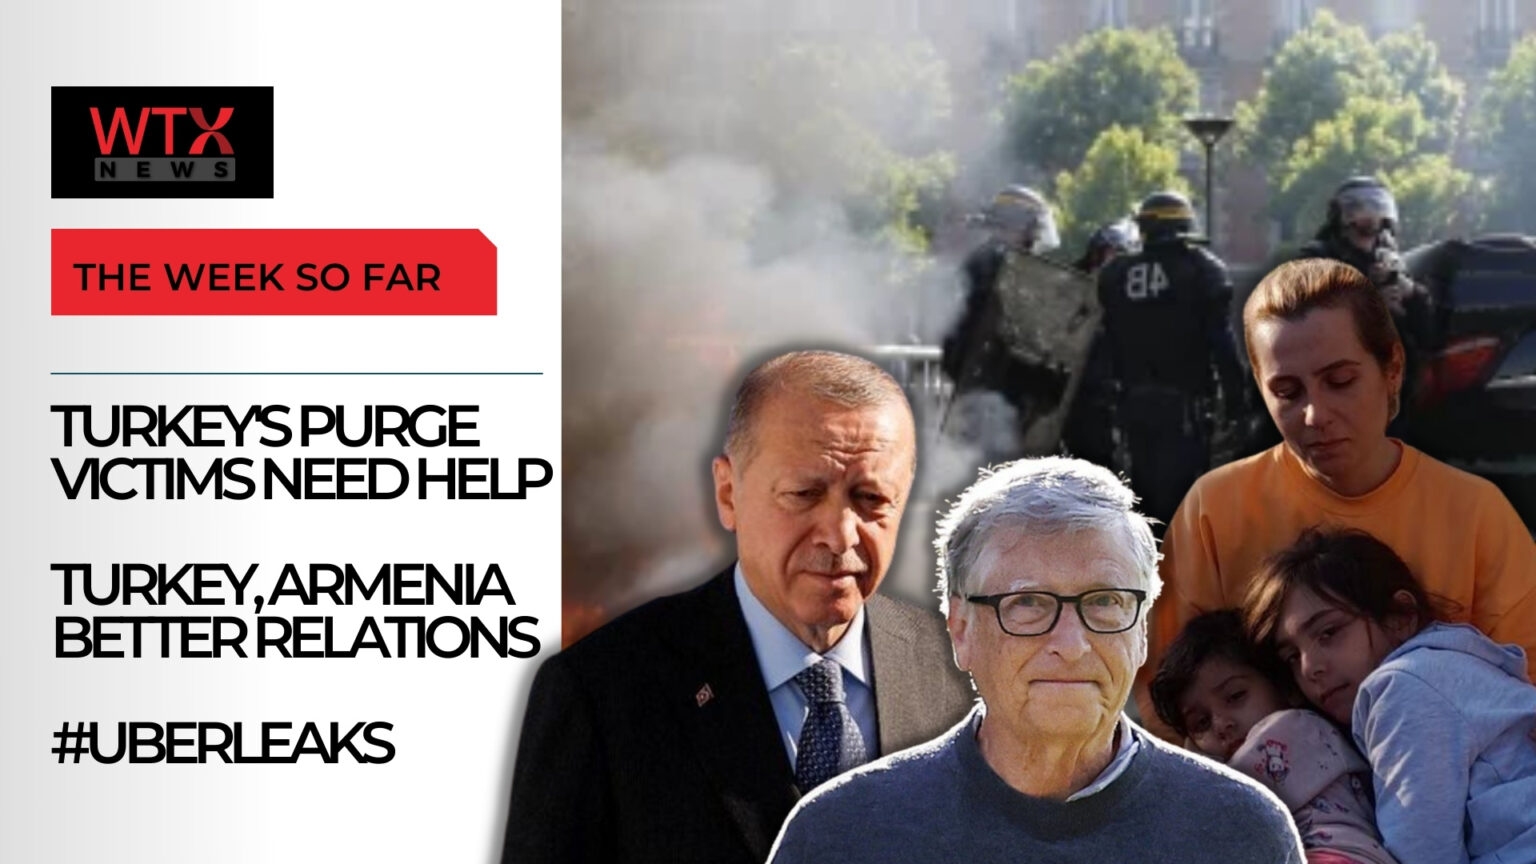 The Eurozone Video News roundup Uberleaks, Bill Gates and Turkey’s purge